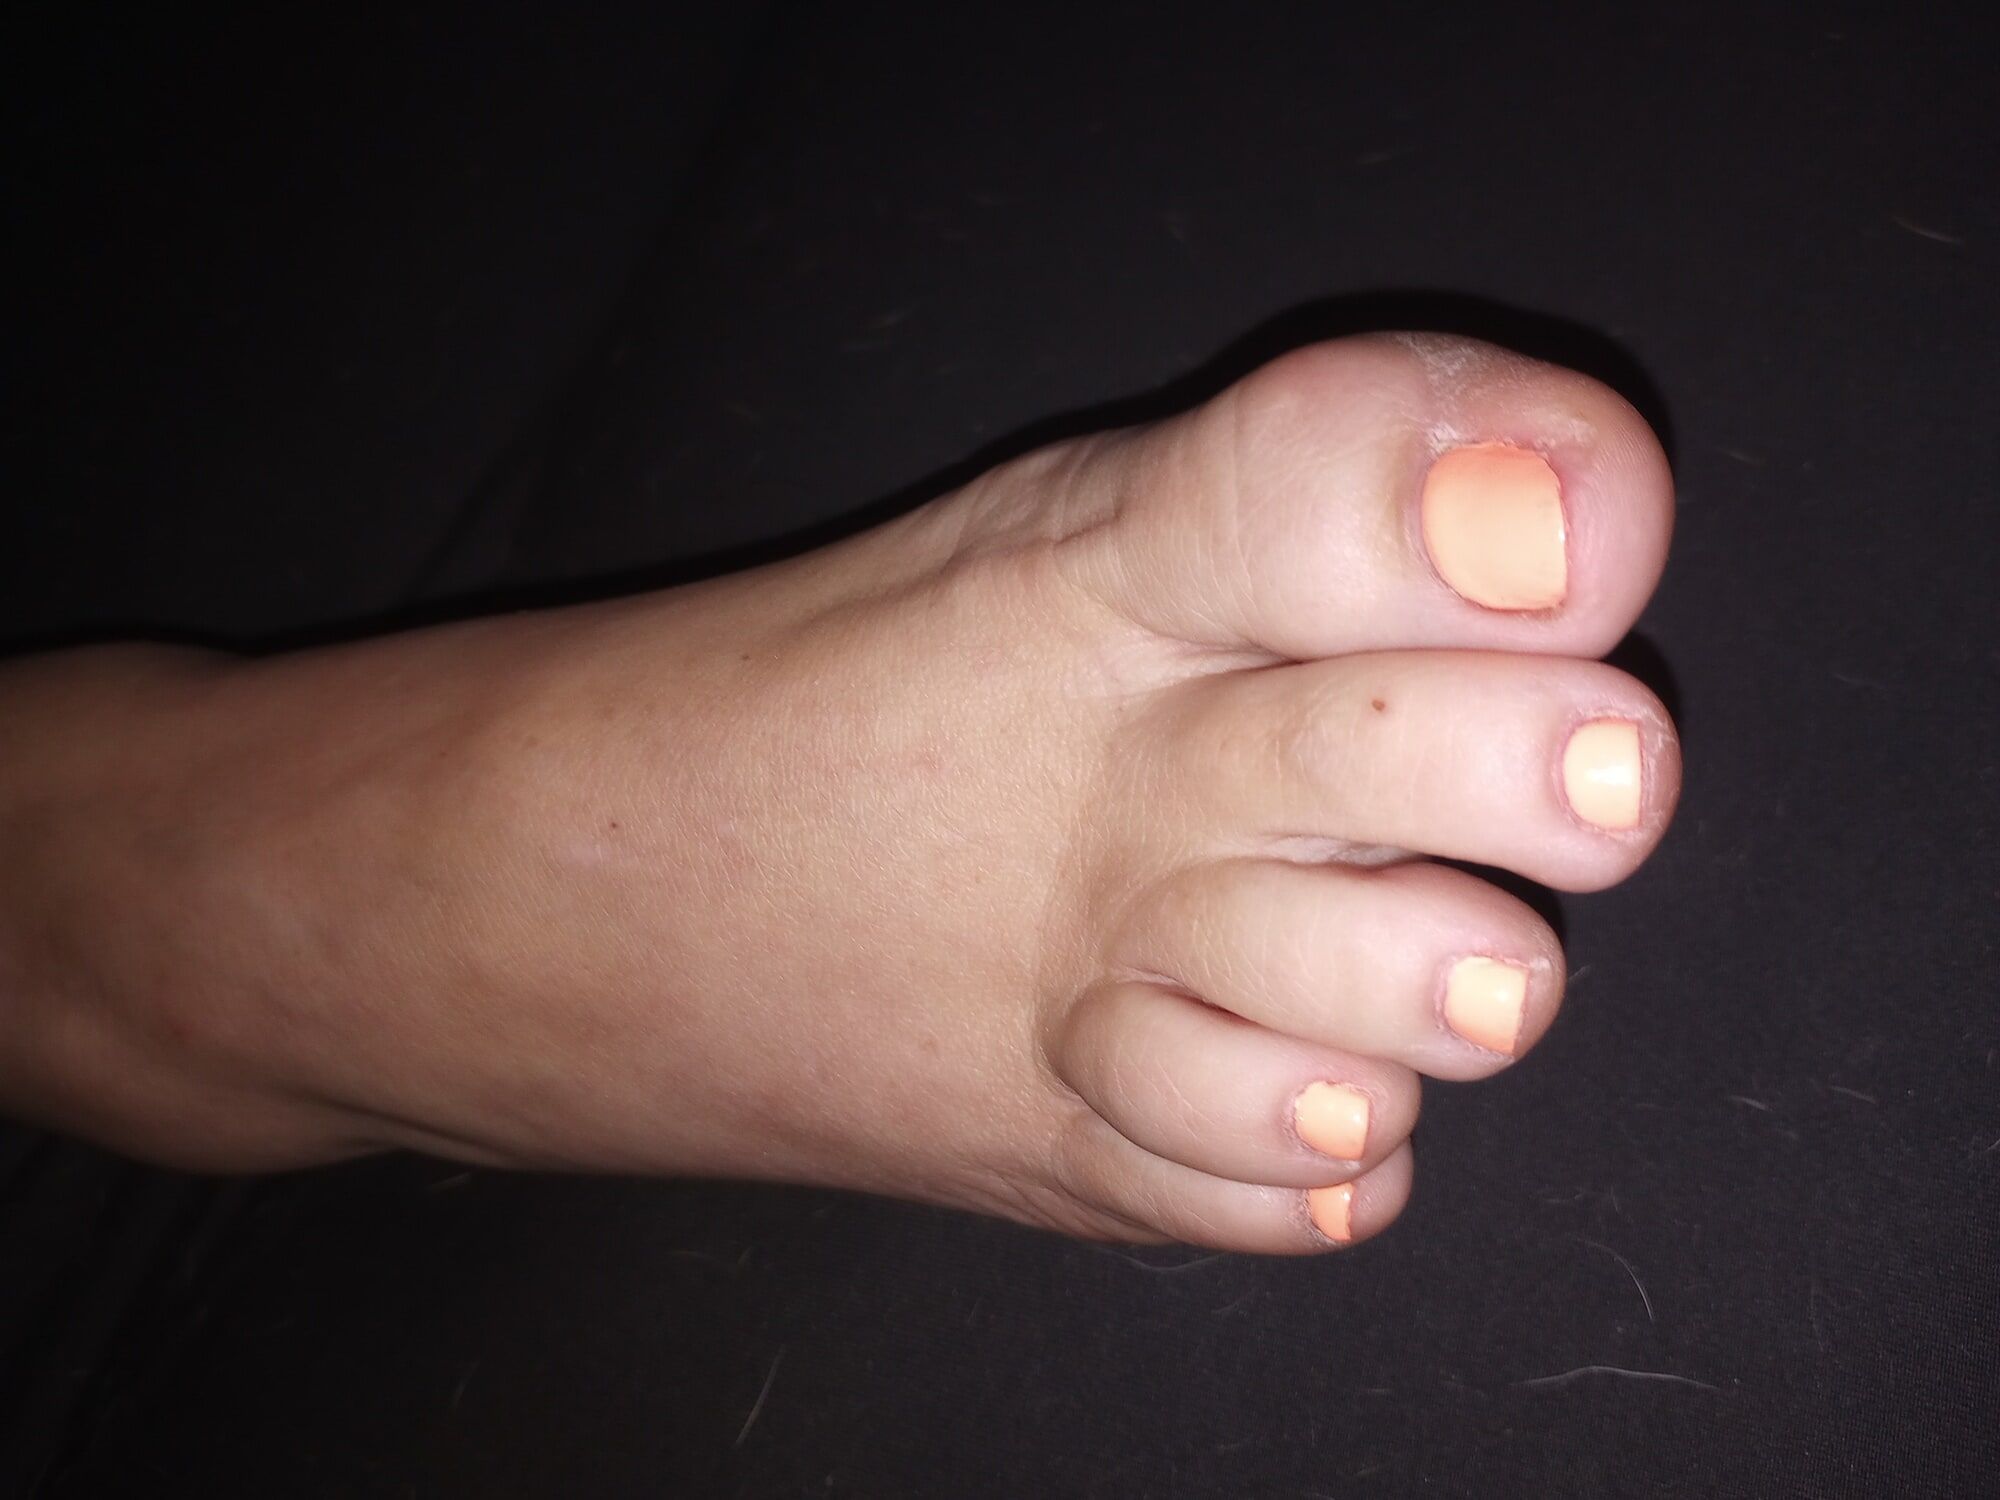 Just My GFs feet